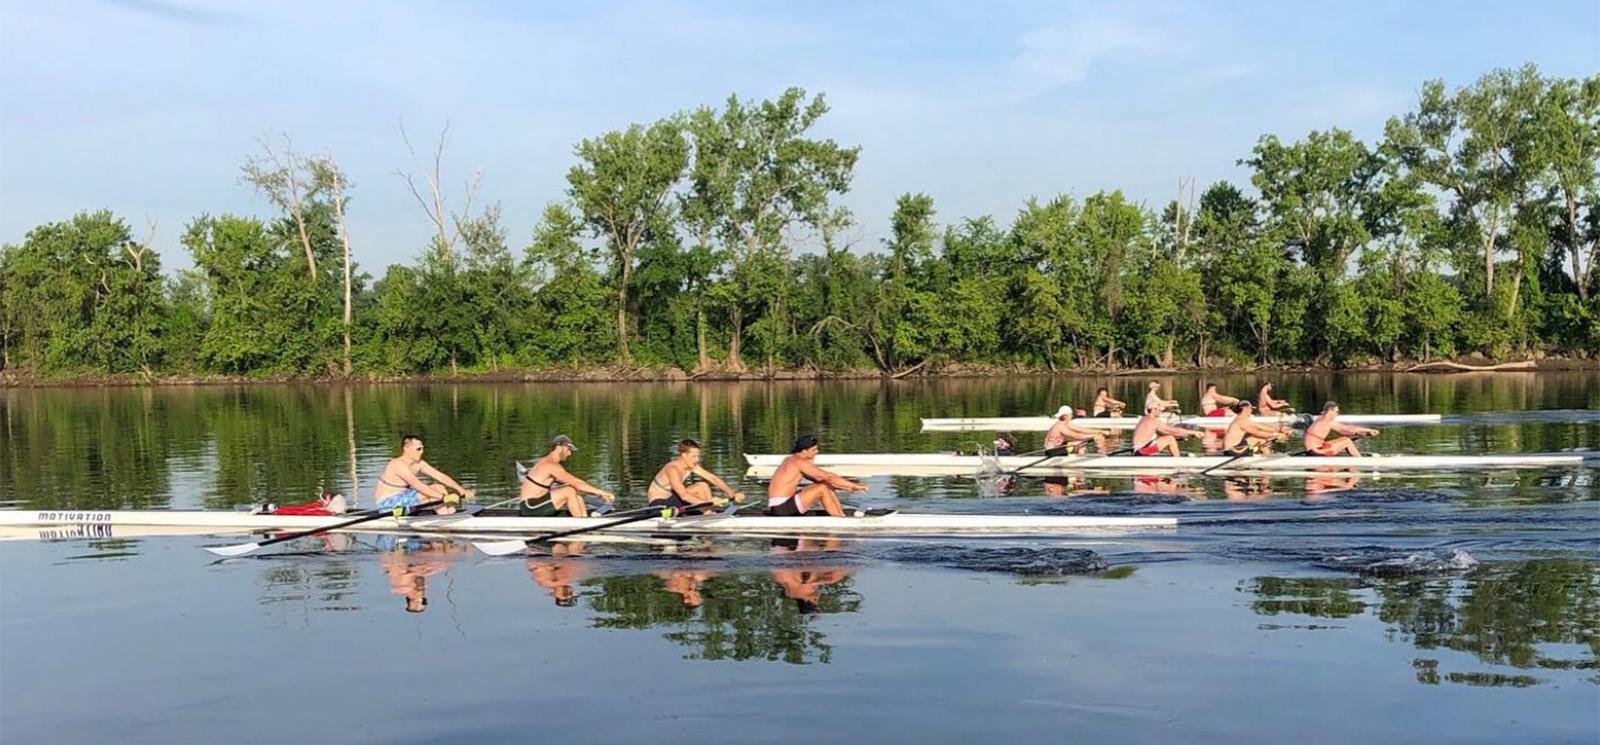 Rowers rowing down river (Instagram@riverfrontmensrowing)